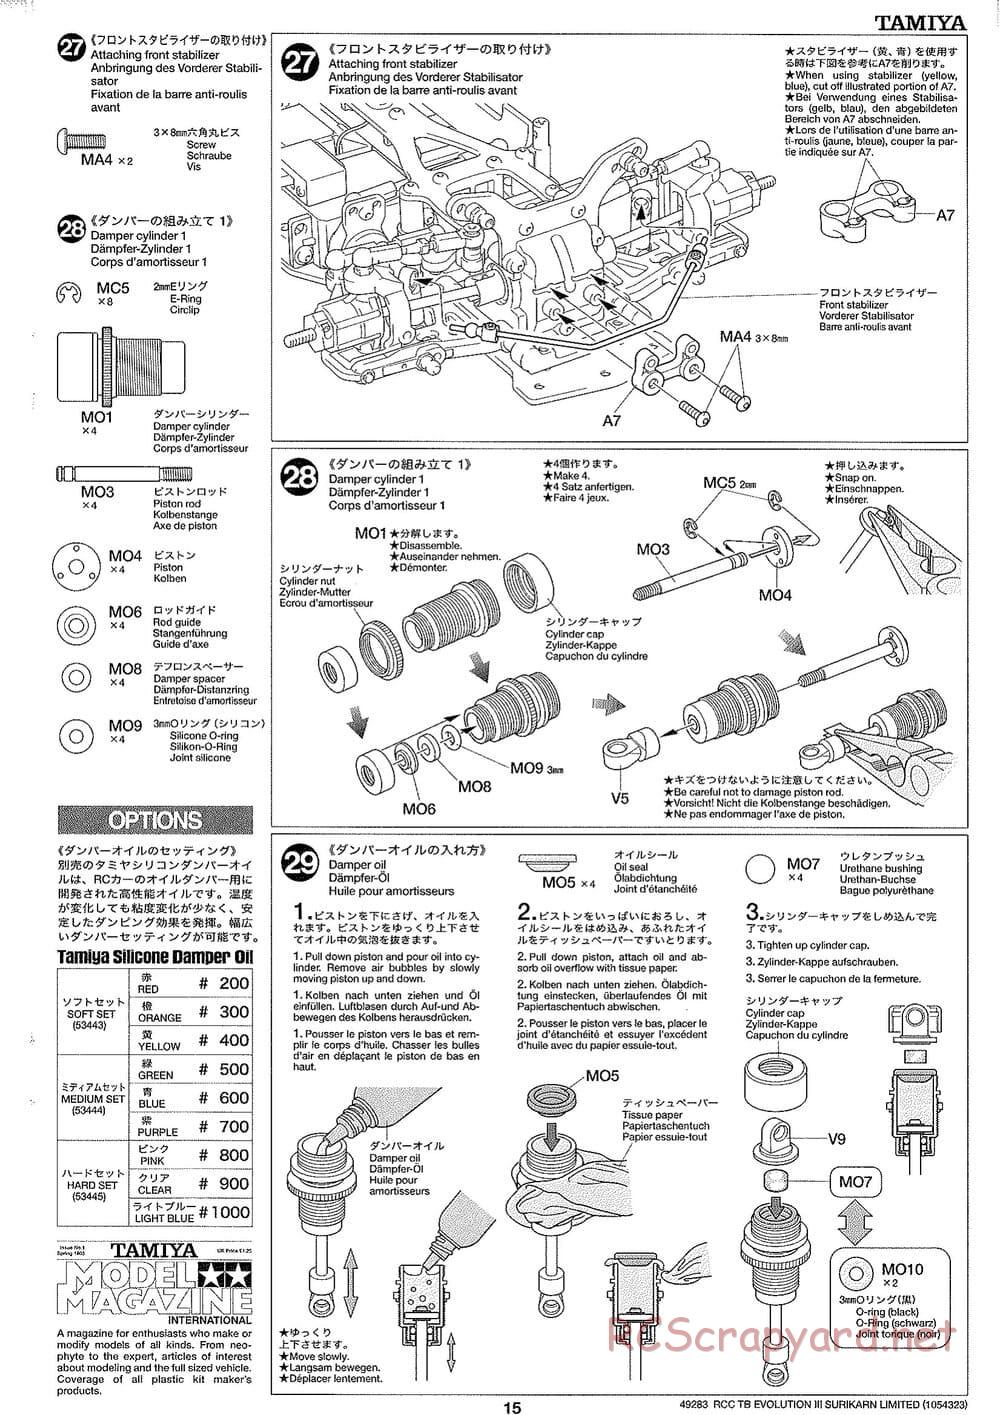 Tamiya - TB Evolution III Surikarn Limited Chassis - Manual - Page 15